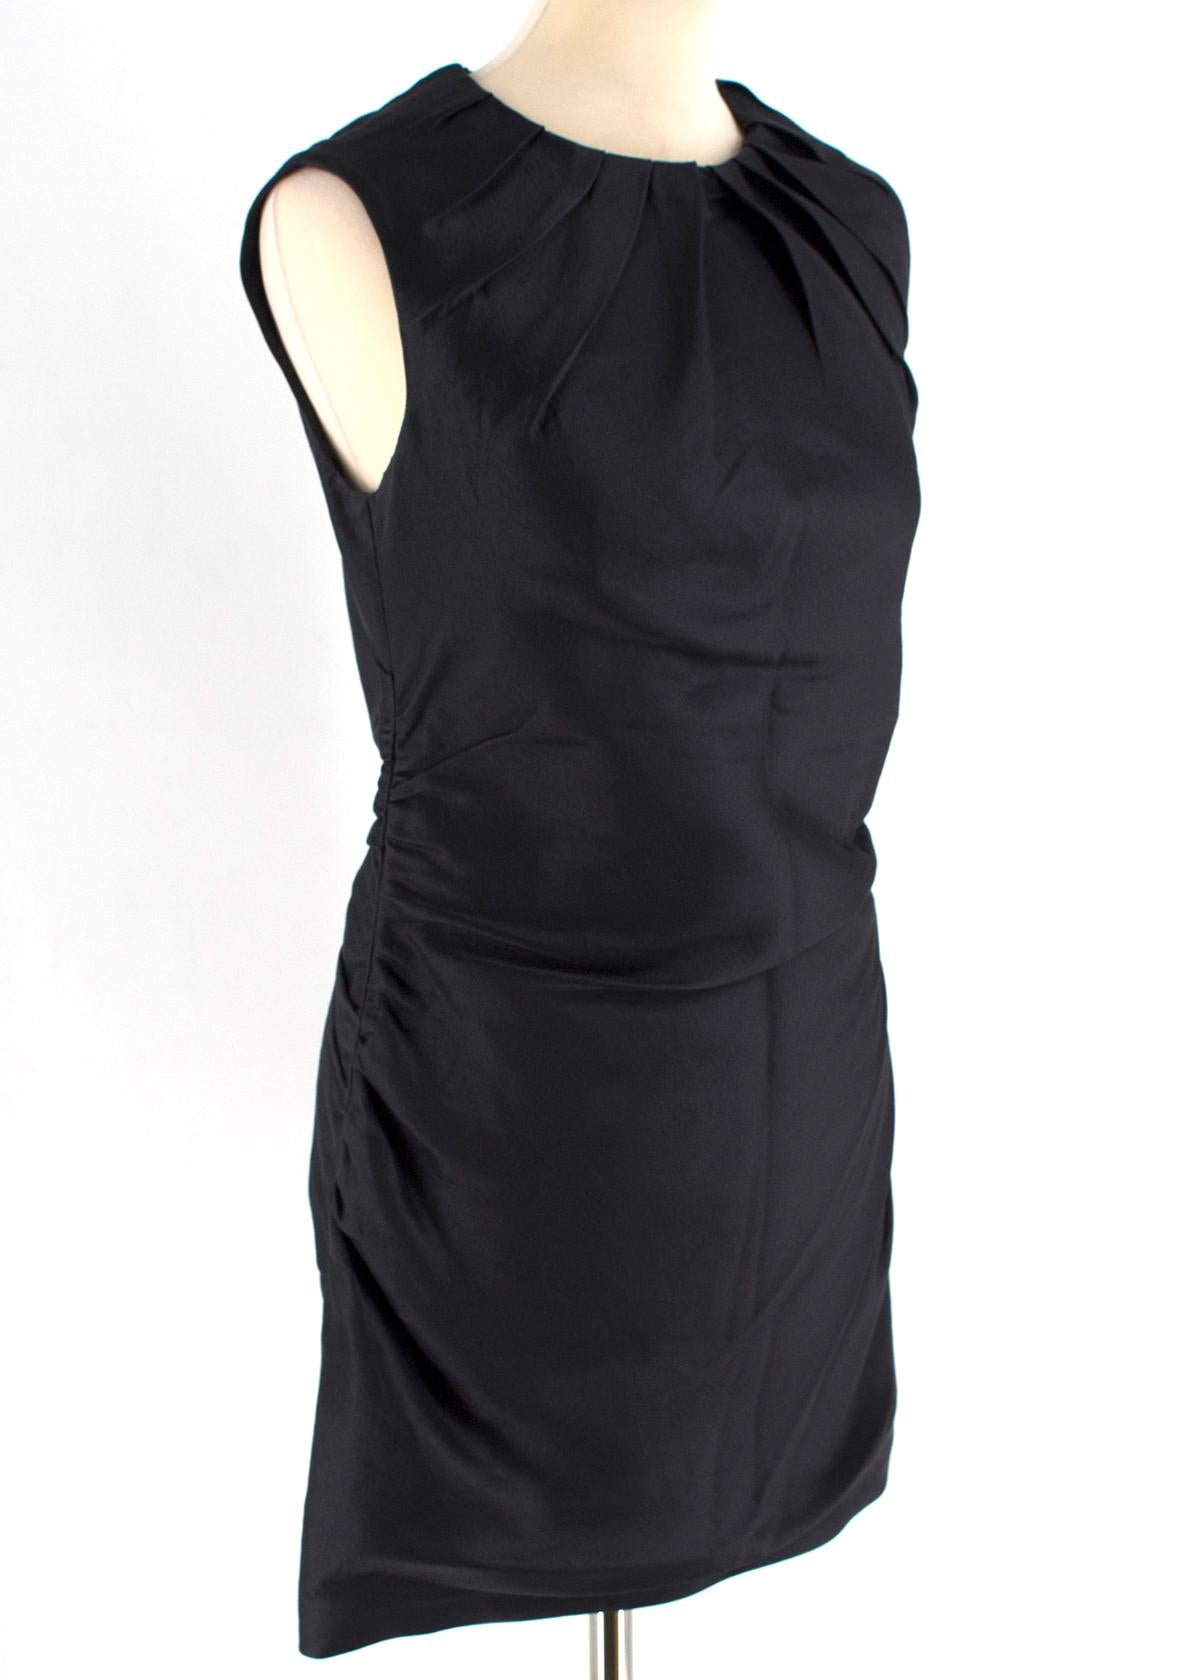 Prada Black pleated ruched sleeveless dress.

- Sleeveless dress
- Black silk/wool
- Ruched back/sides
- Pleated neck line
- Short dress
Measurements are taken laying flat, seam to seam. 

Length - 74cm
Shoulder width - 35cm
Chest width - 43cm 
